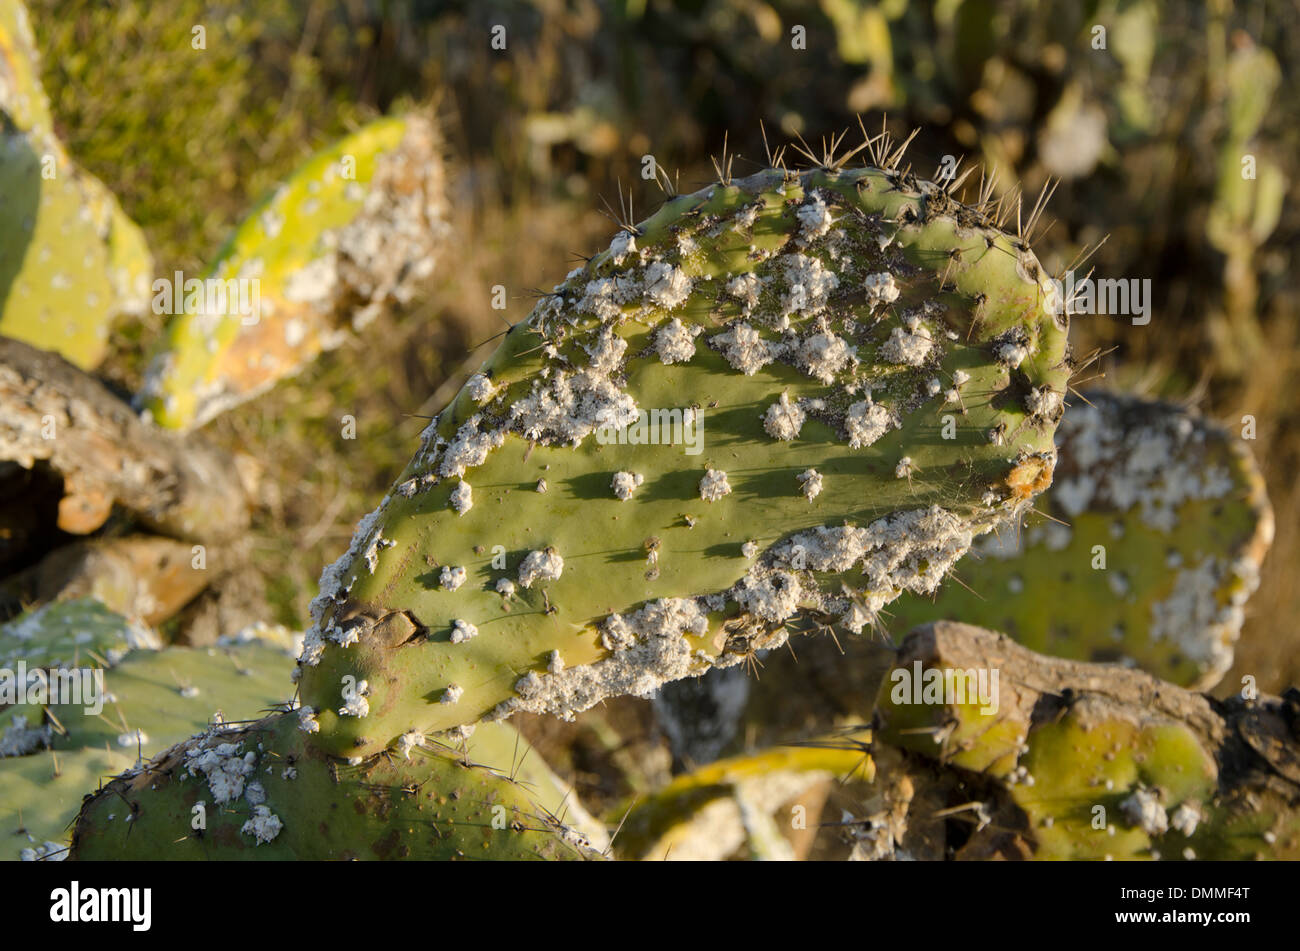 Cochinilla (Dactylopius coccus) de nopal (Opuntia ficus-indica), Andalucía, España. Foto de stock